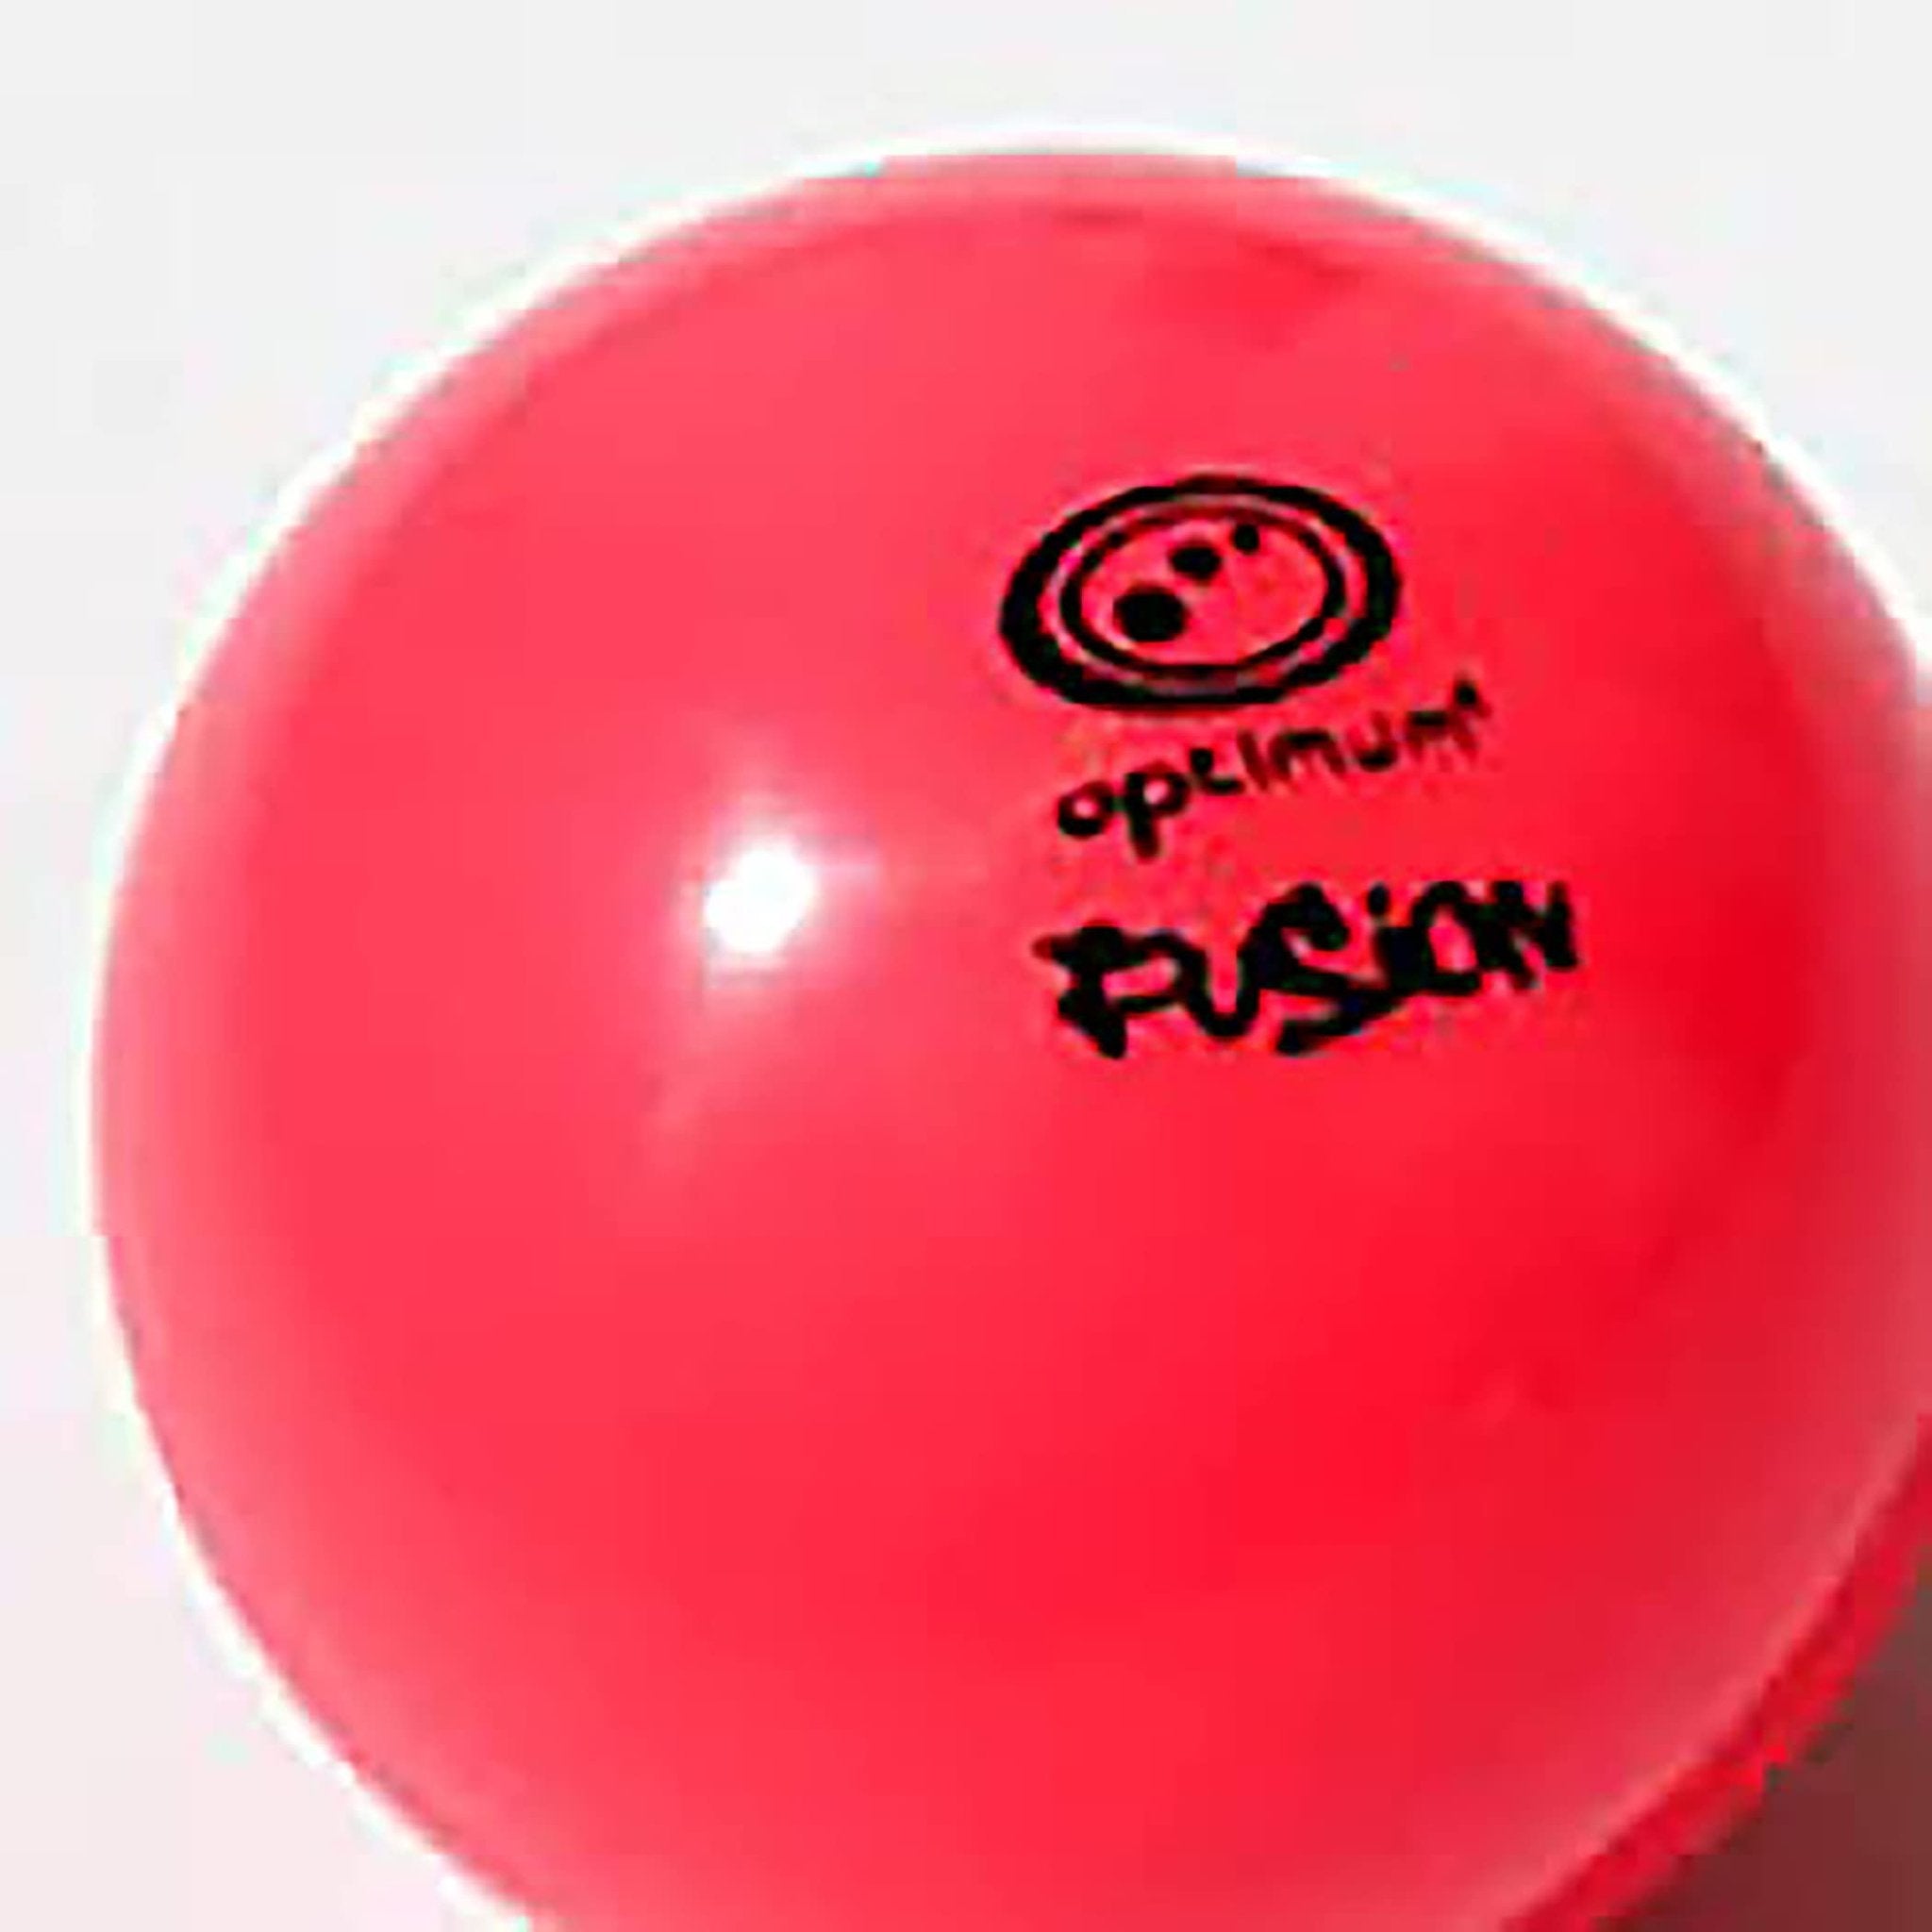 Fusion Hockey Ball - Pink - Optimum